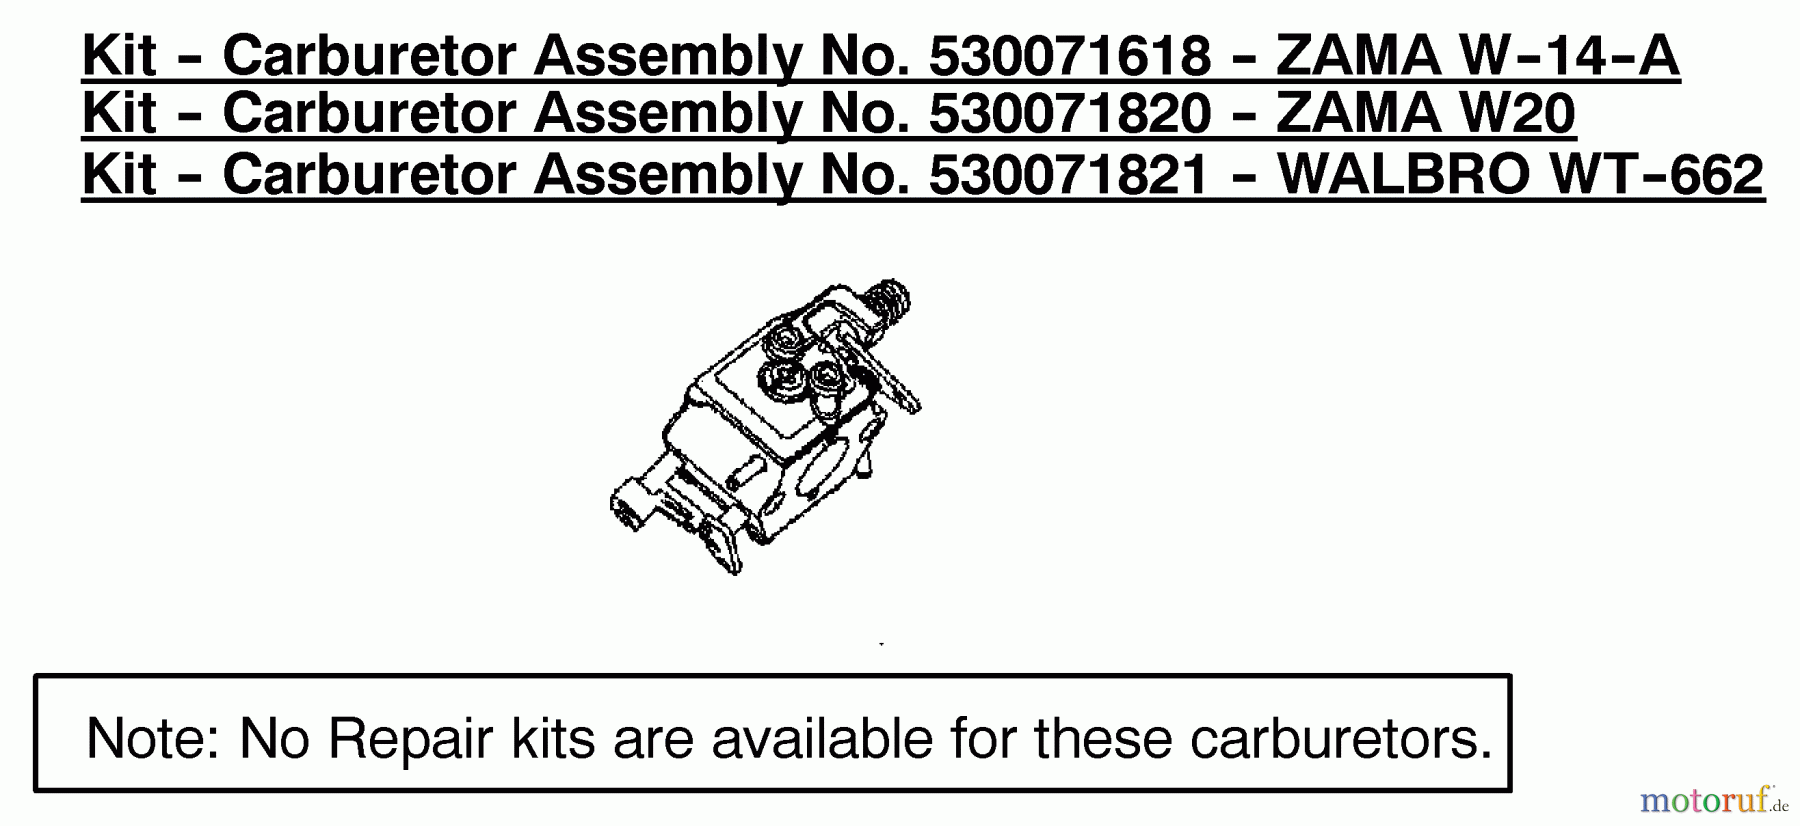  Poulan / Weed Eater Motorsägen 1975 (Type 2) - Poulan Woodshark Chainsaw Carburetor Assembly (Zama W-14-A) P/N 530071618